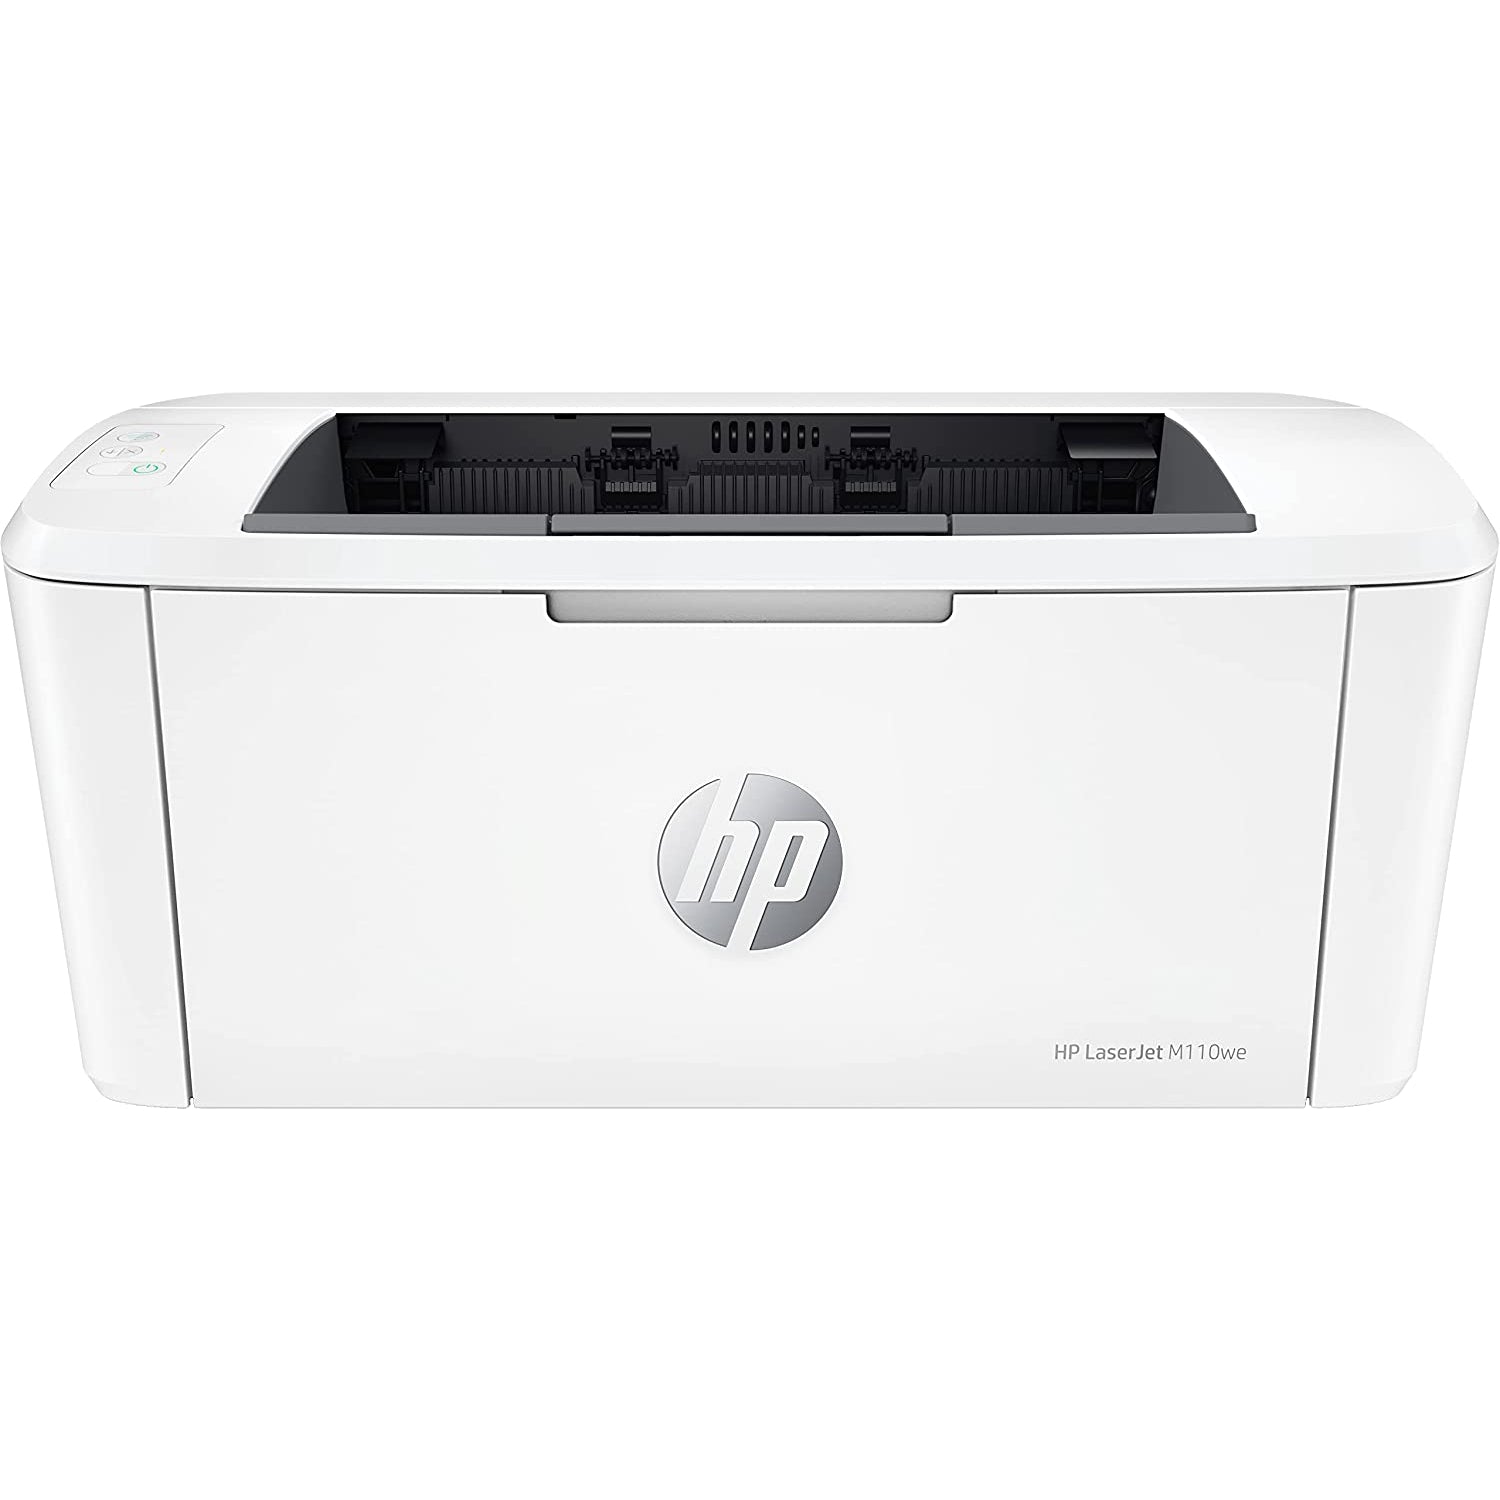 HP LaserJet M110we Wireless Mono Printer - Refurbished Pristine